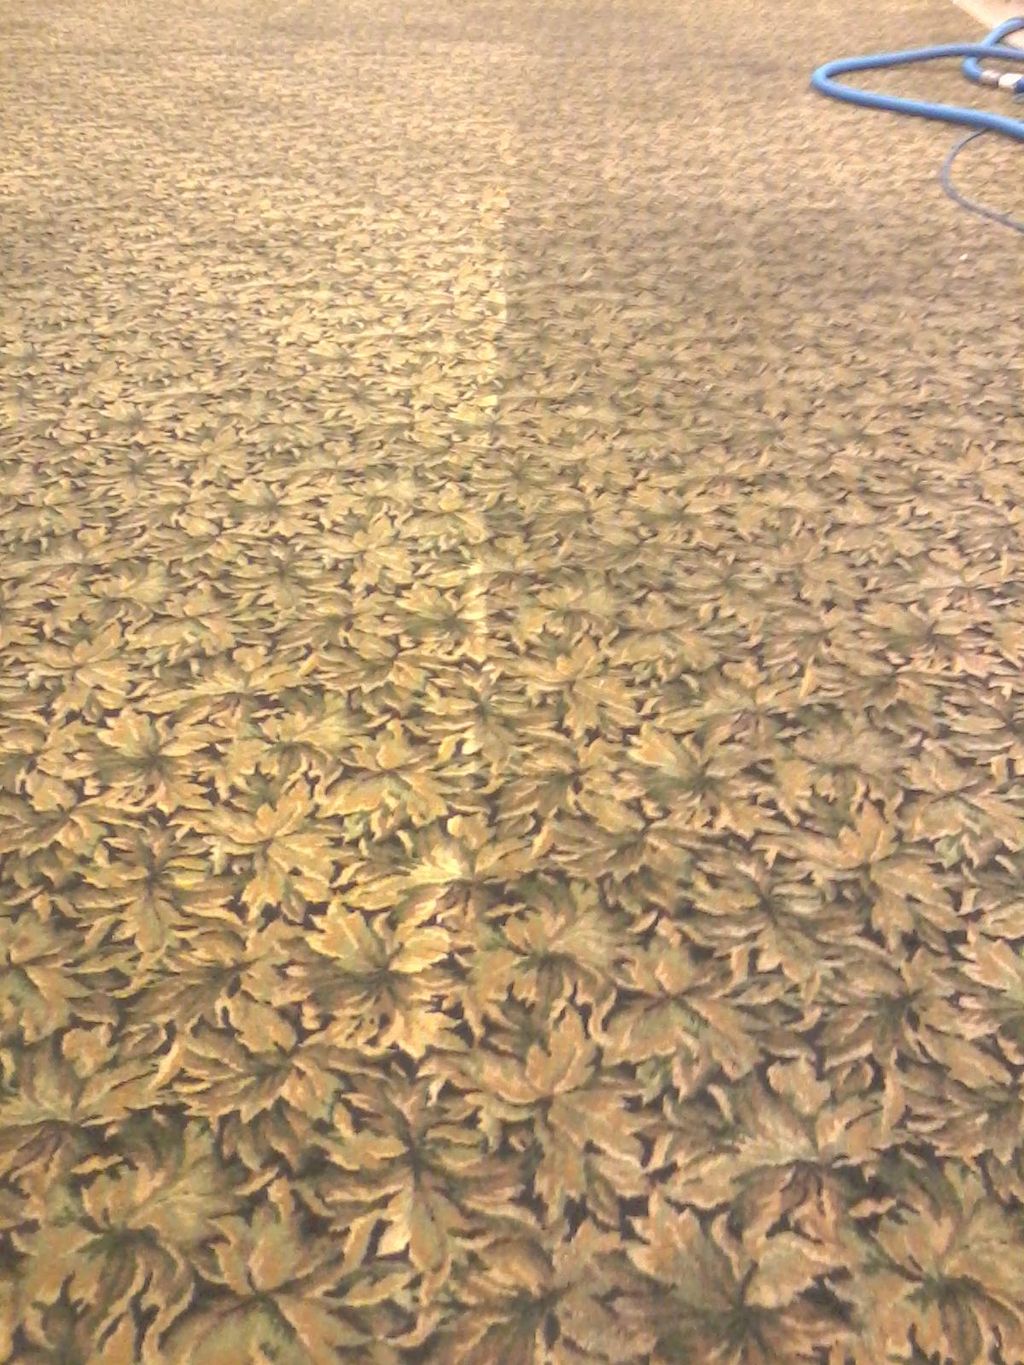 Servdry, Inc. Water Damage and Carpet Cleanig